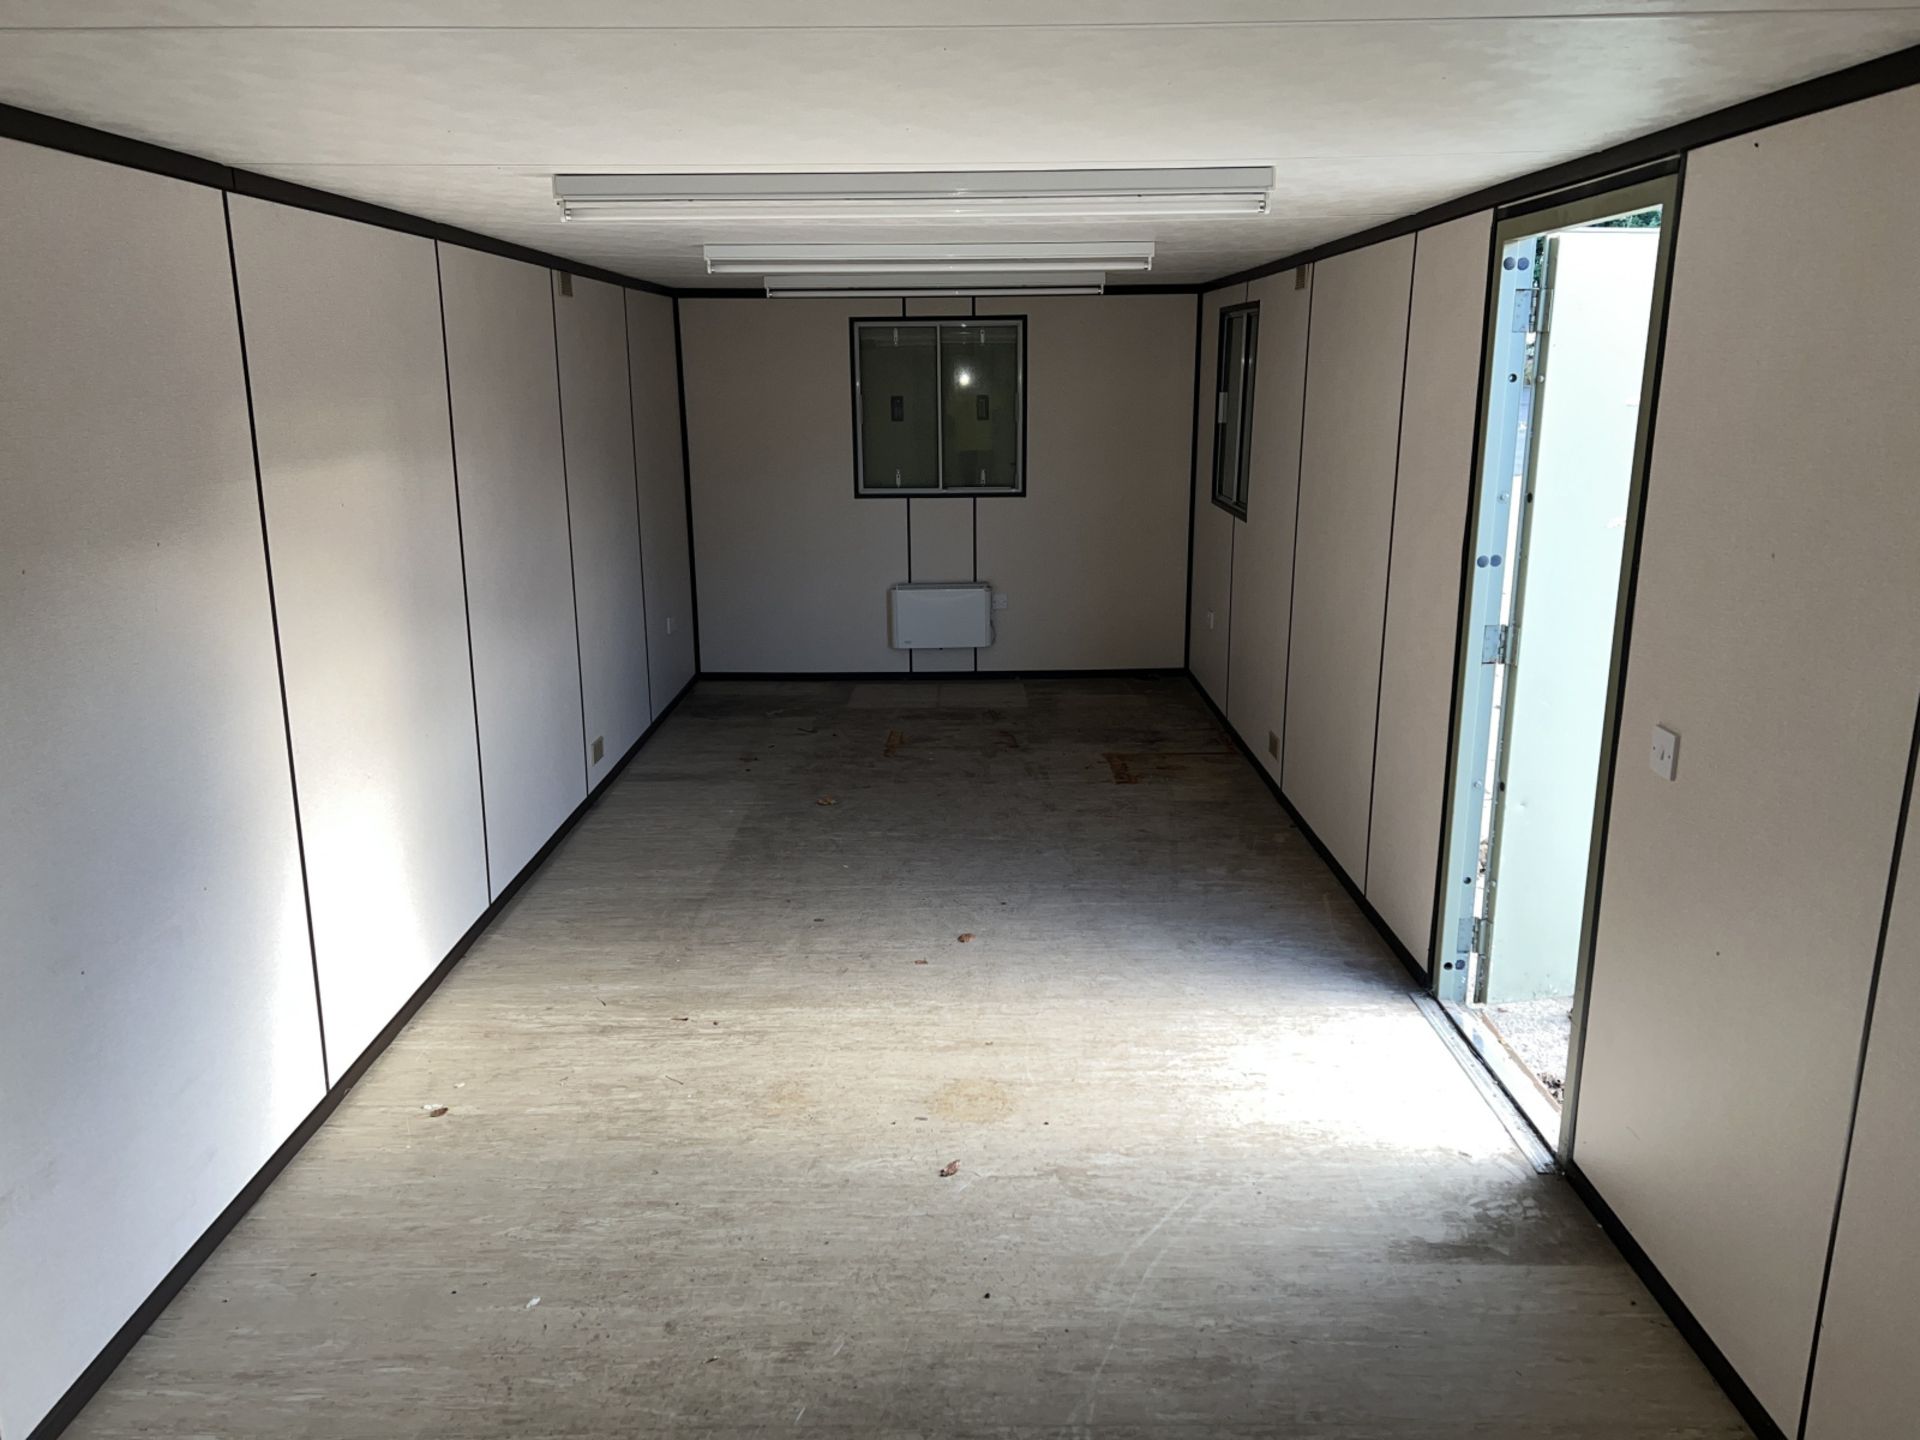 30 foot portacabin office suite - 230V fuse board, 5x tubular lighting, 2x heaters, 3x windows - Image 5 of 15